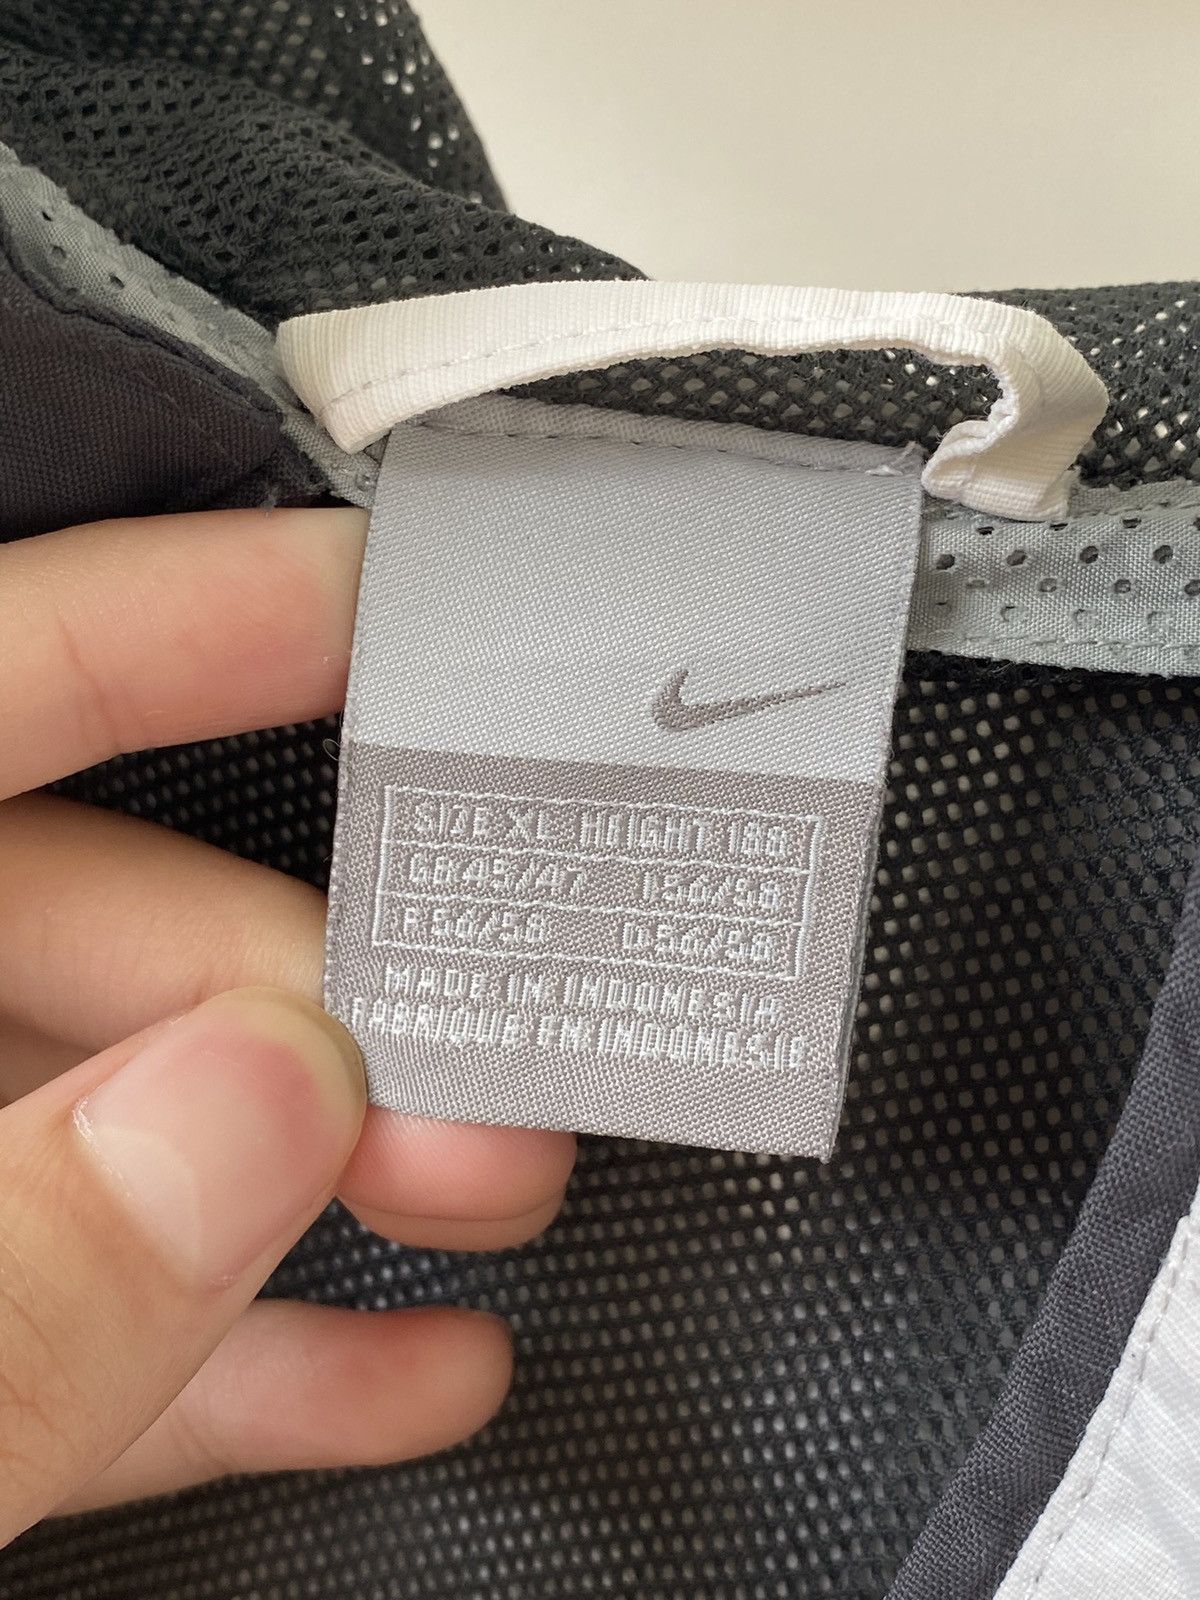 Nike Vintage Nike Shox Anorak Jacket Size US XL / EU 56 / 4 - 7 Thumbnail